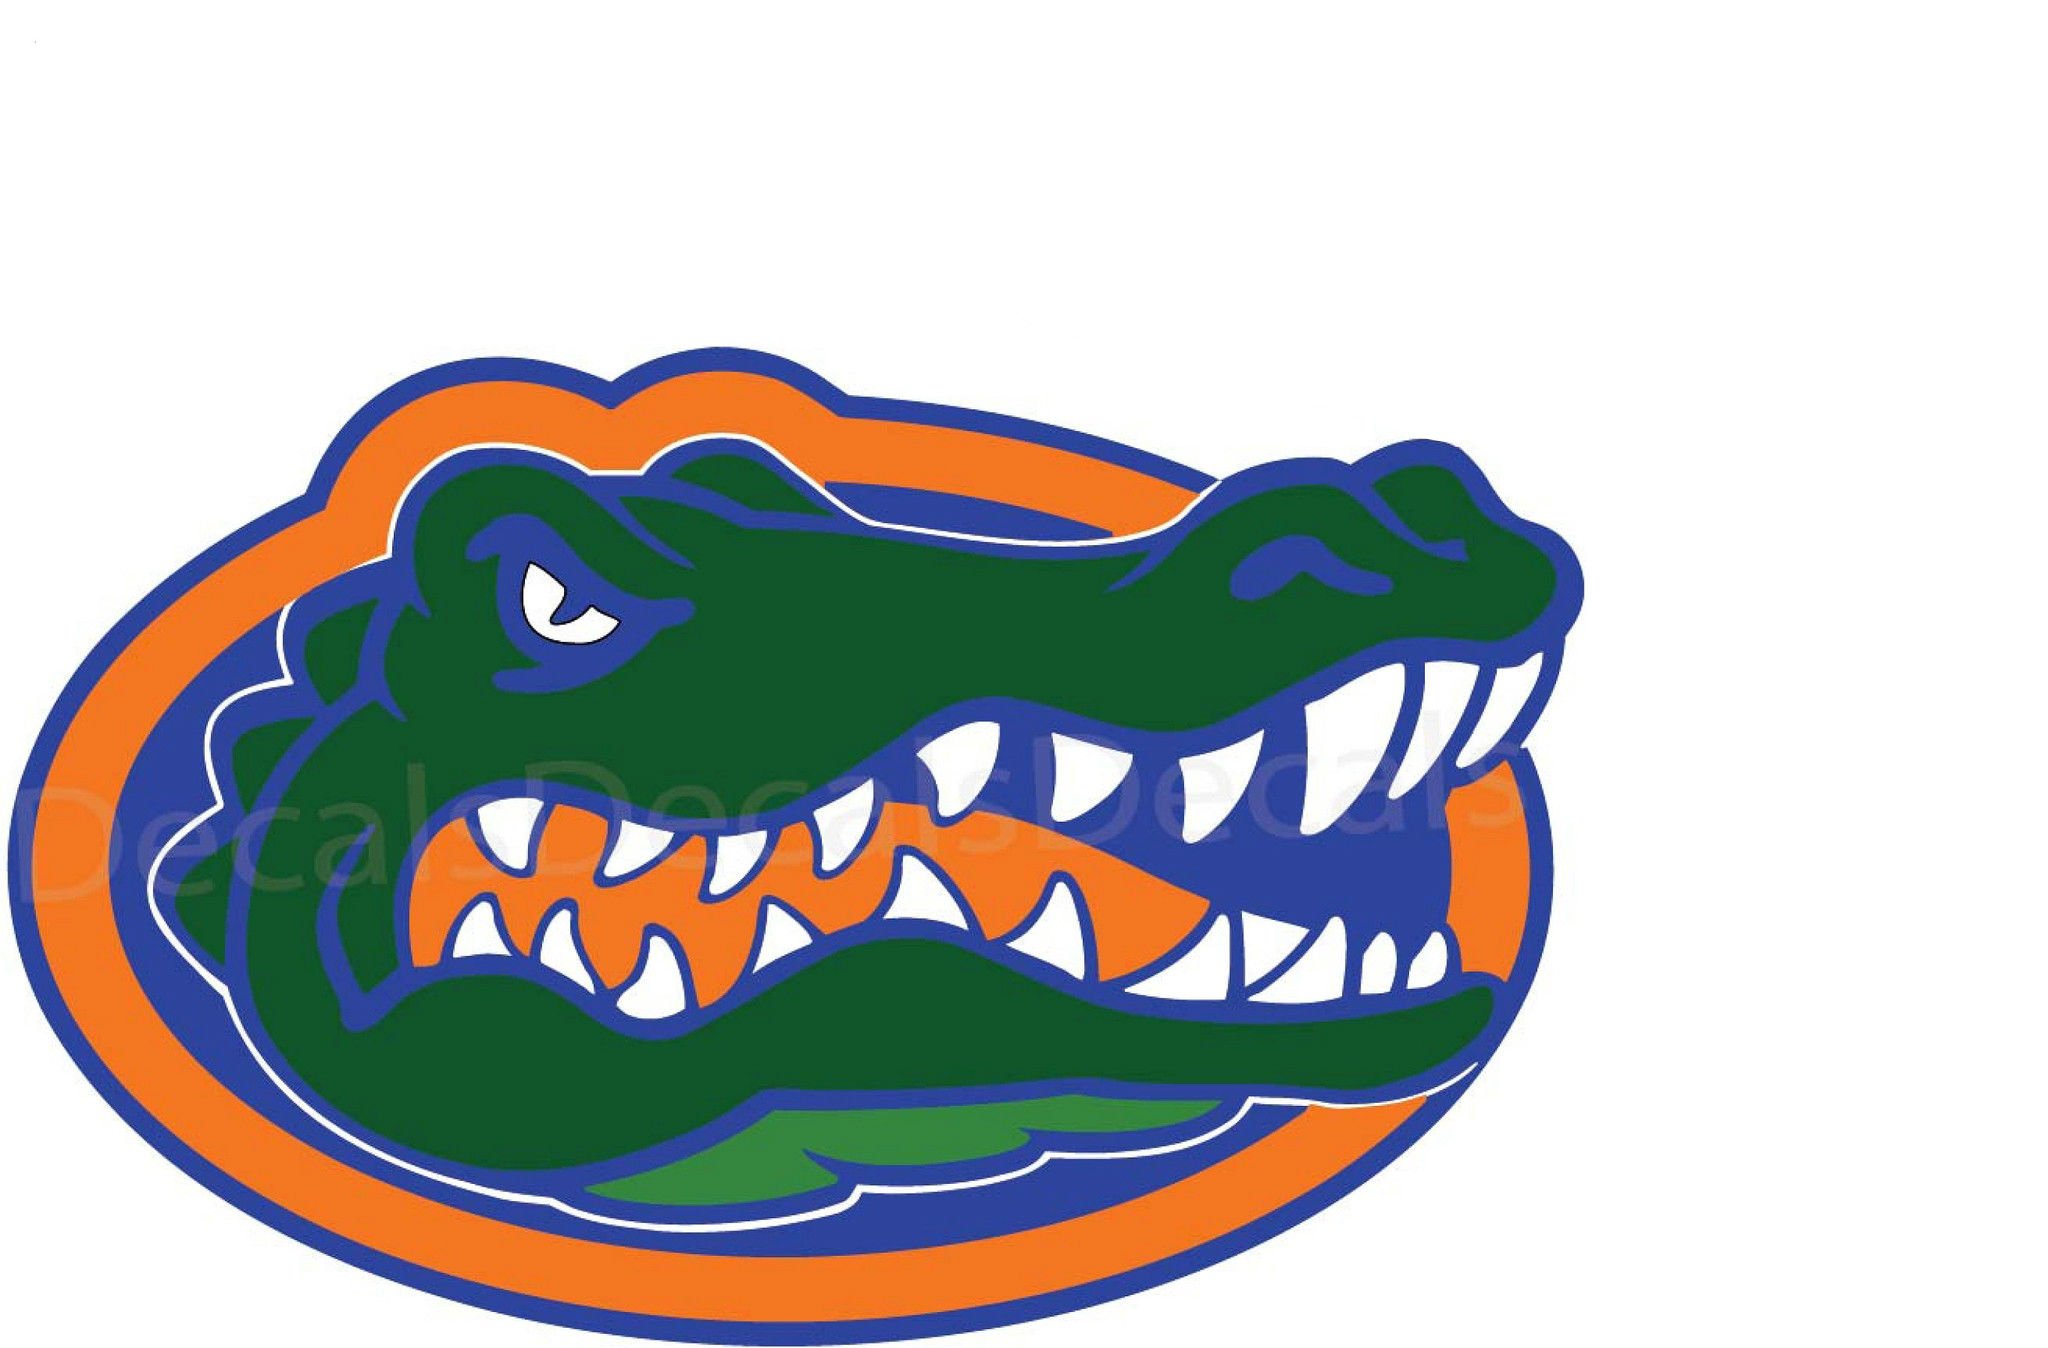 Florida Gators College Football Wallpaper Background